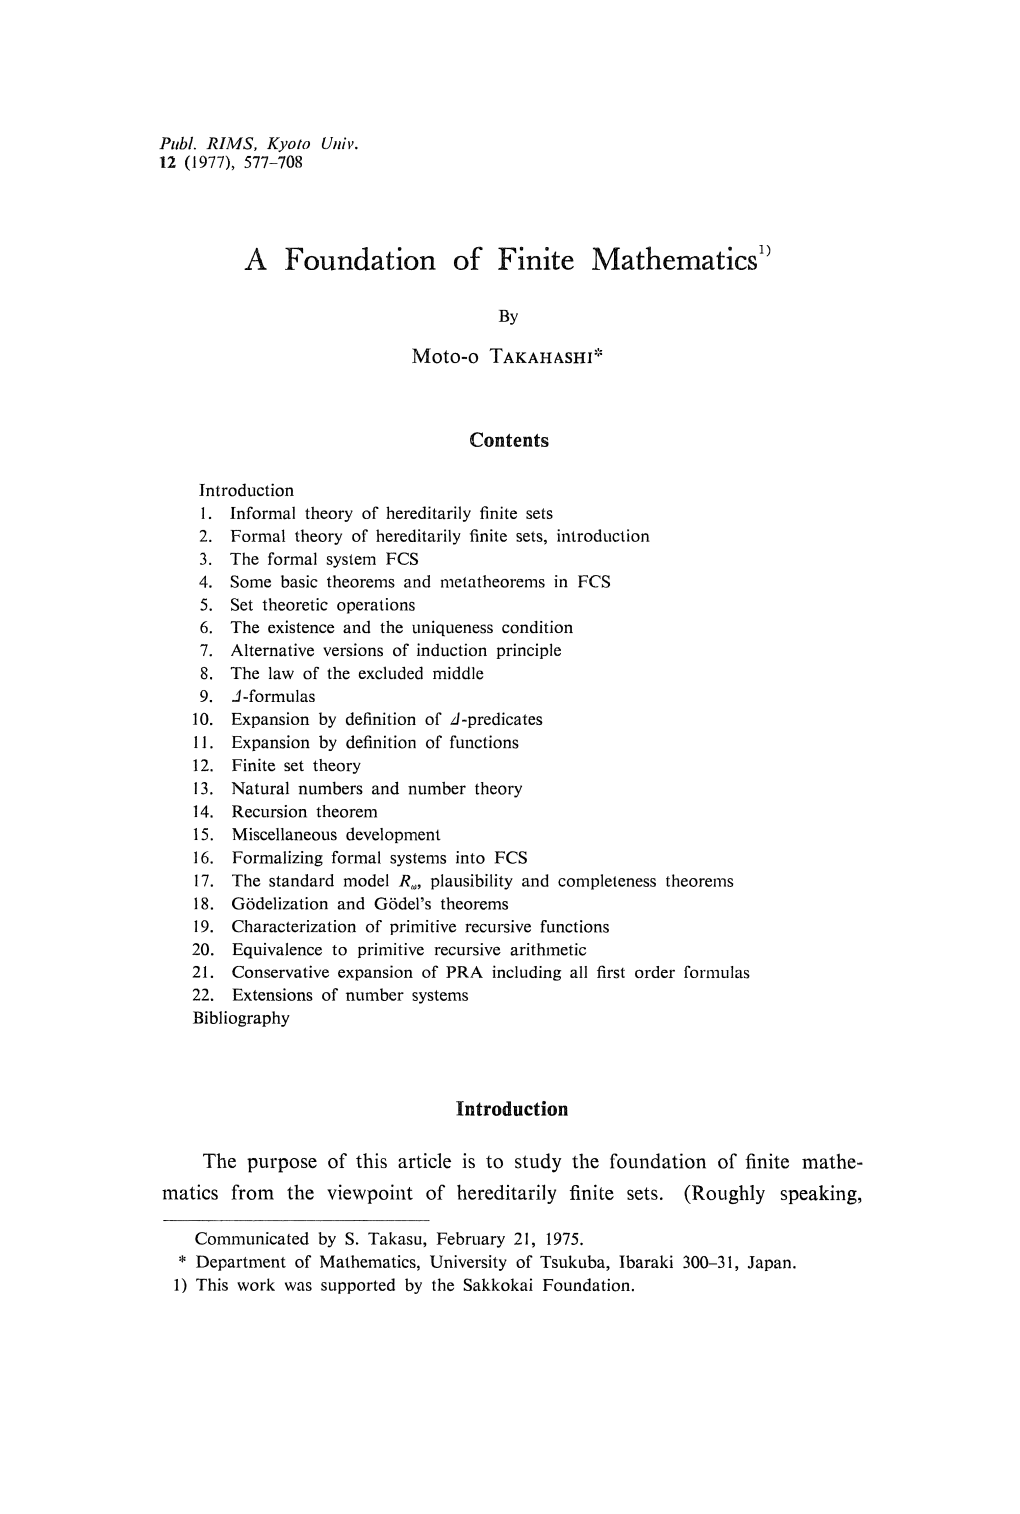 A Foundation of Finite Mathematics1